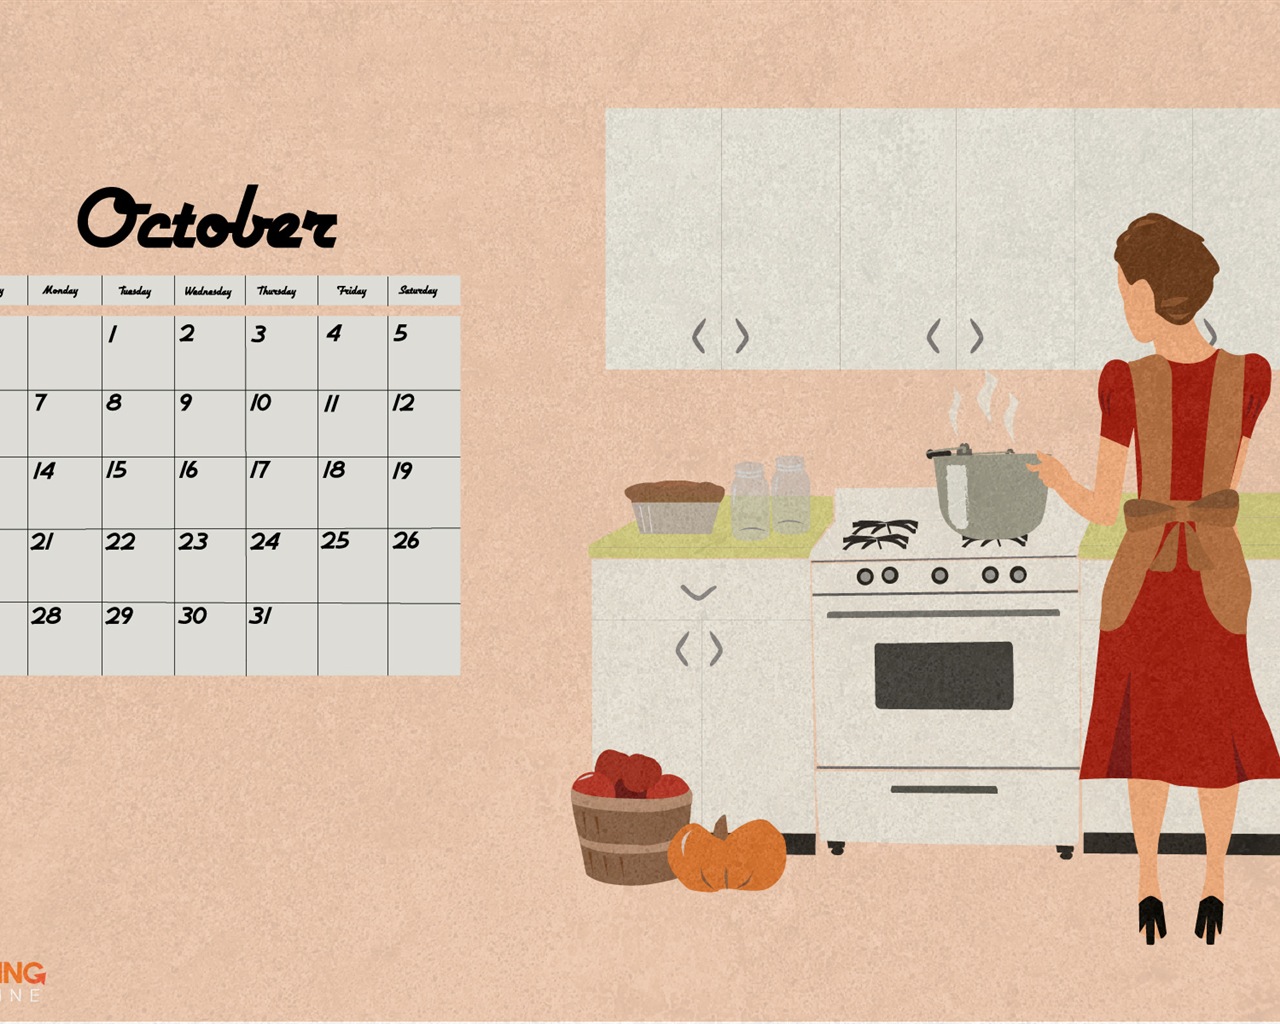 October 2013 calendar wallpaper (2) #17 - 1280x1024